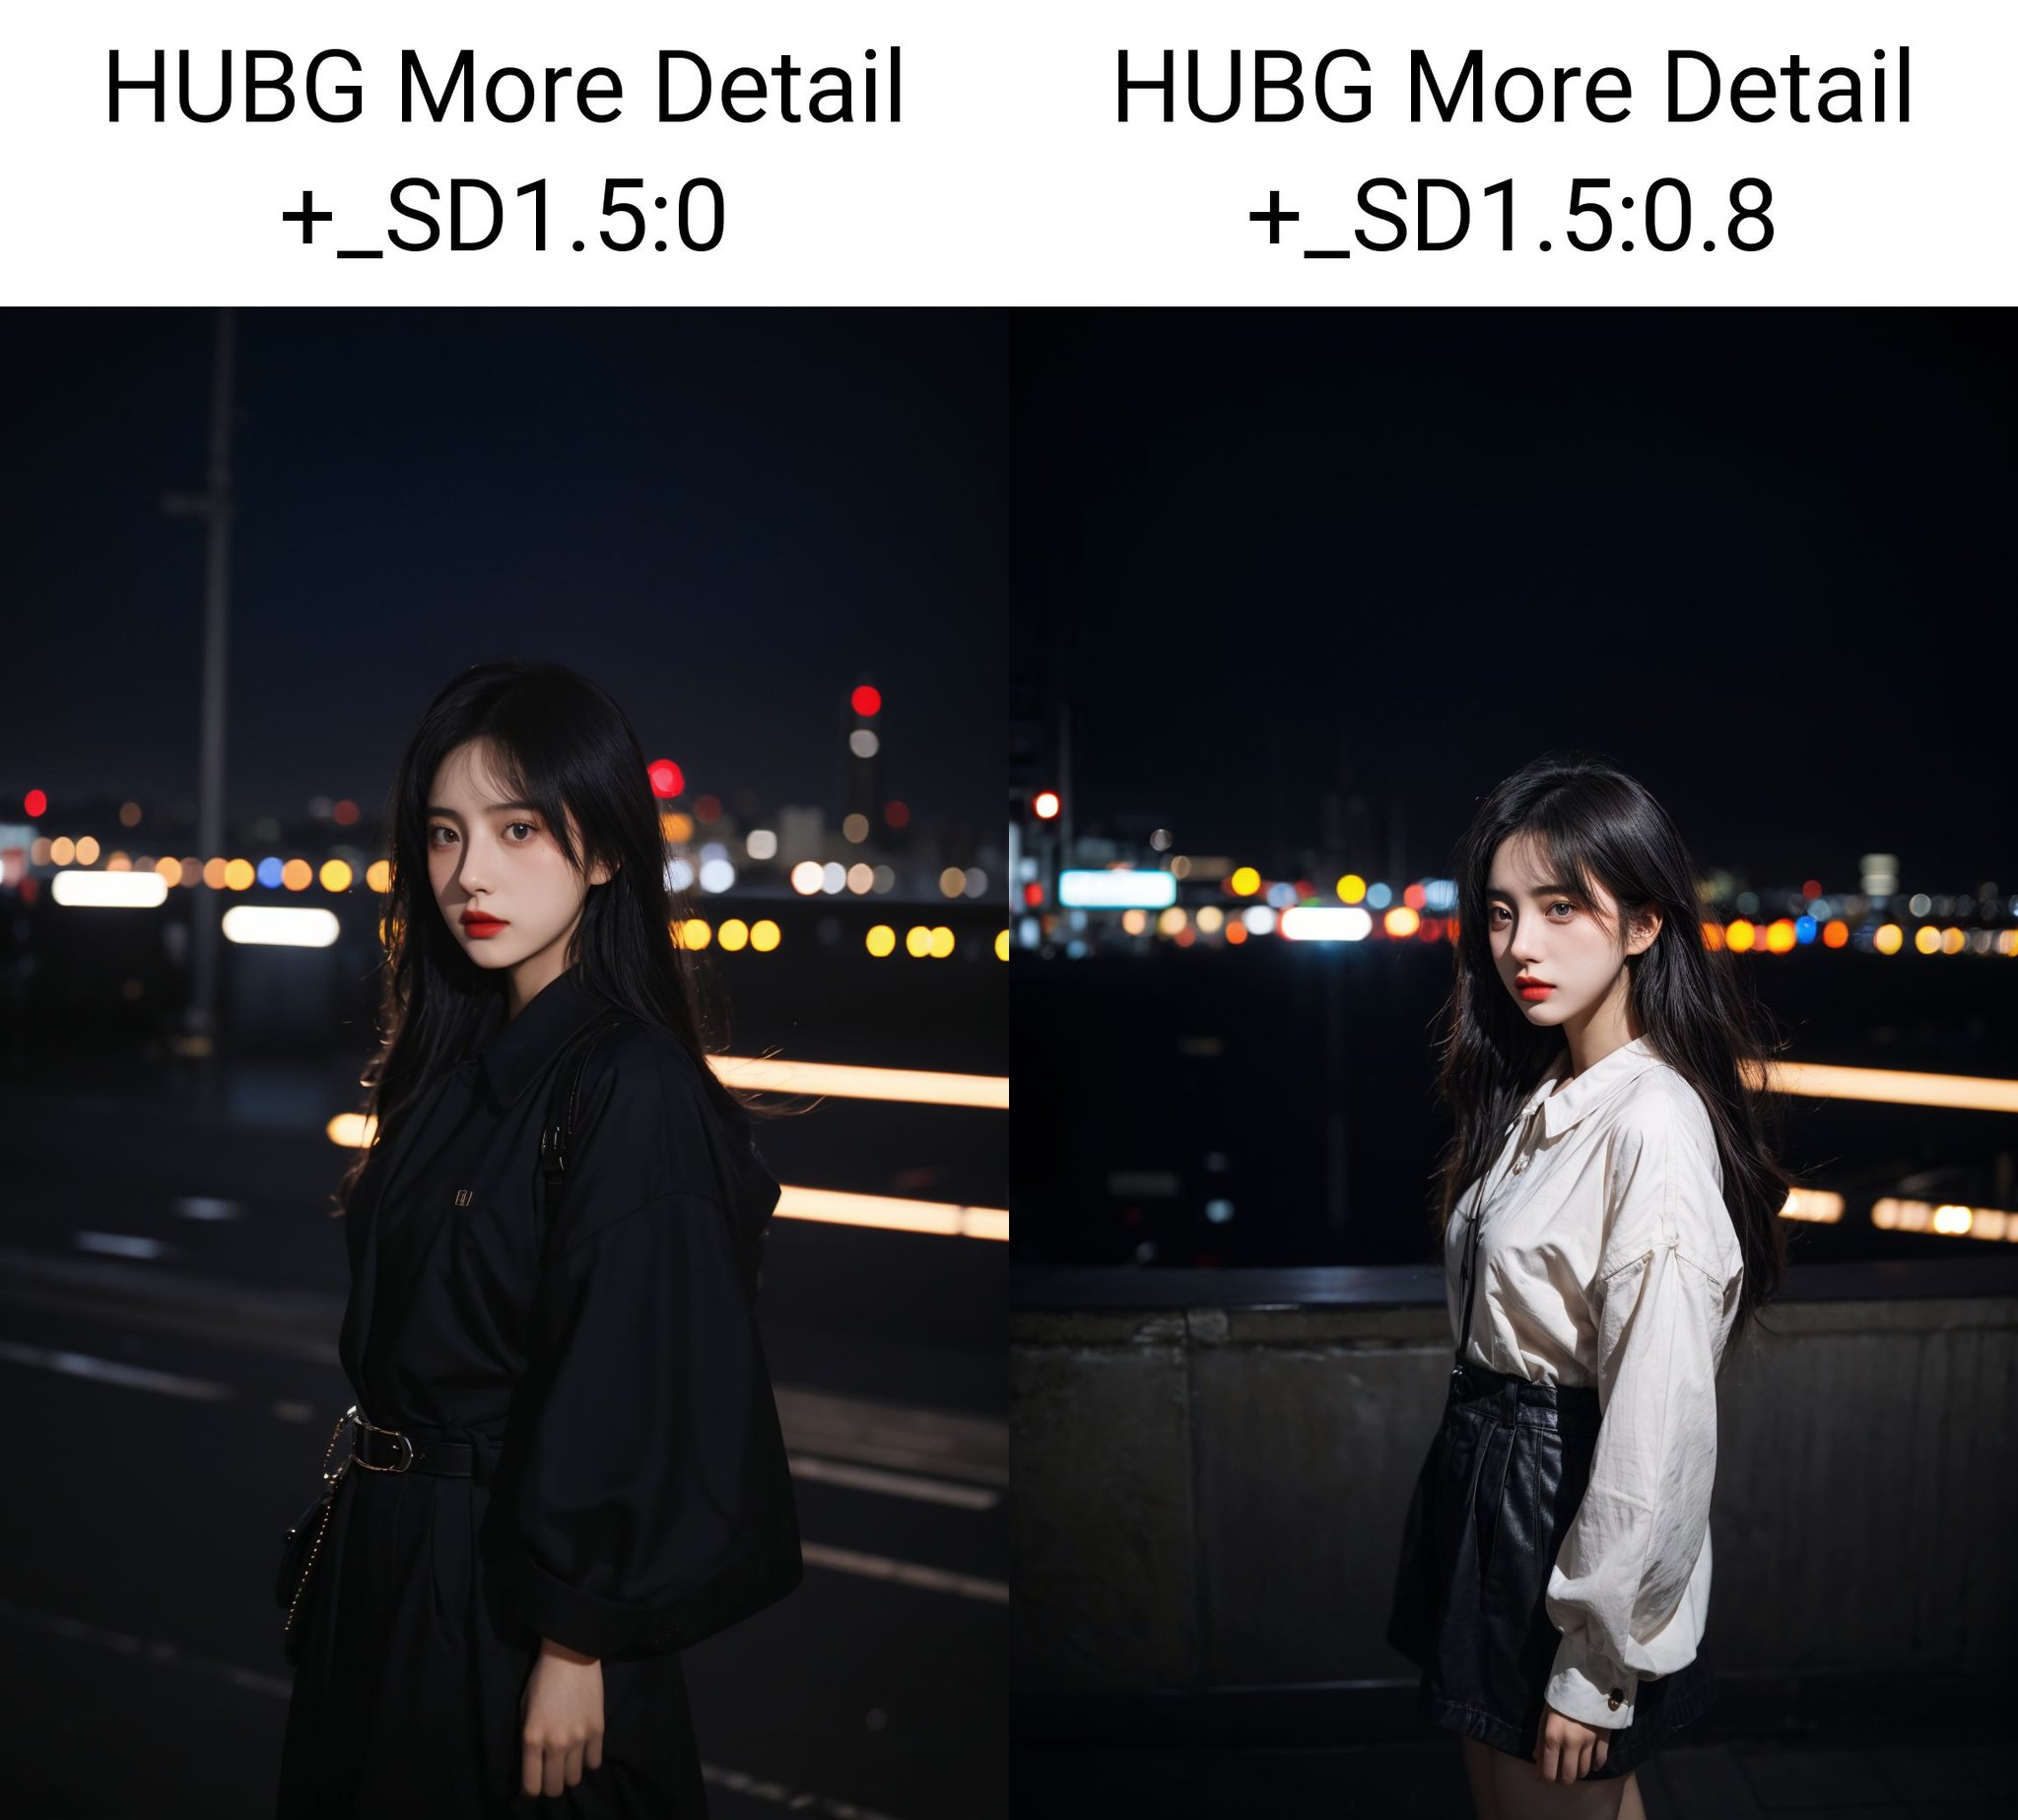 hubggirl,(Cinematic Aesthetic:1.4) Photo of a beautiful korean fashion model bokeh city night,<lora:HUBG More Detail +_SD1.5:0>,